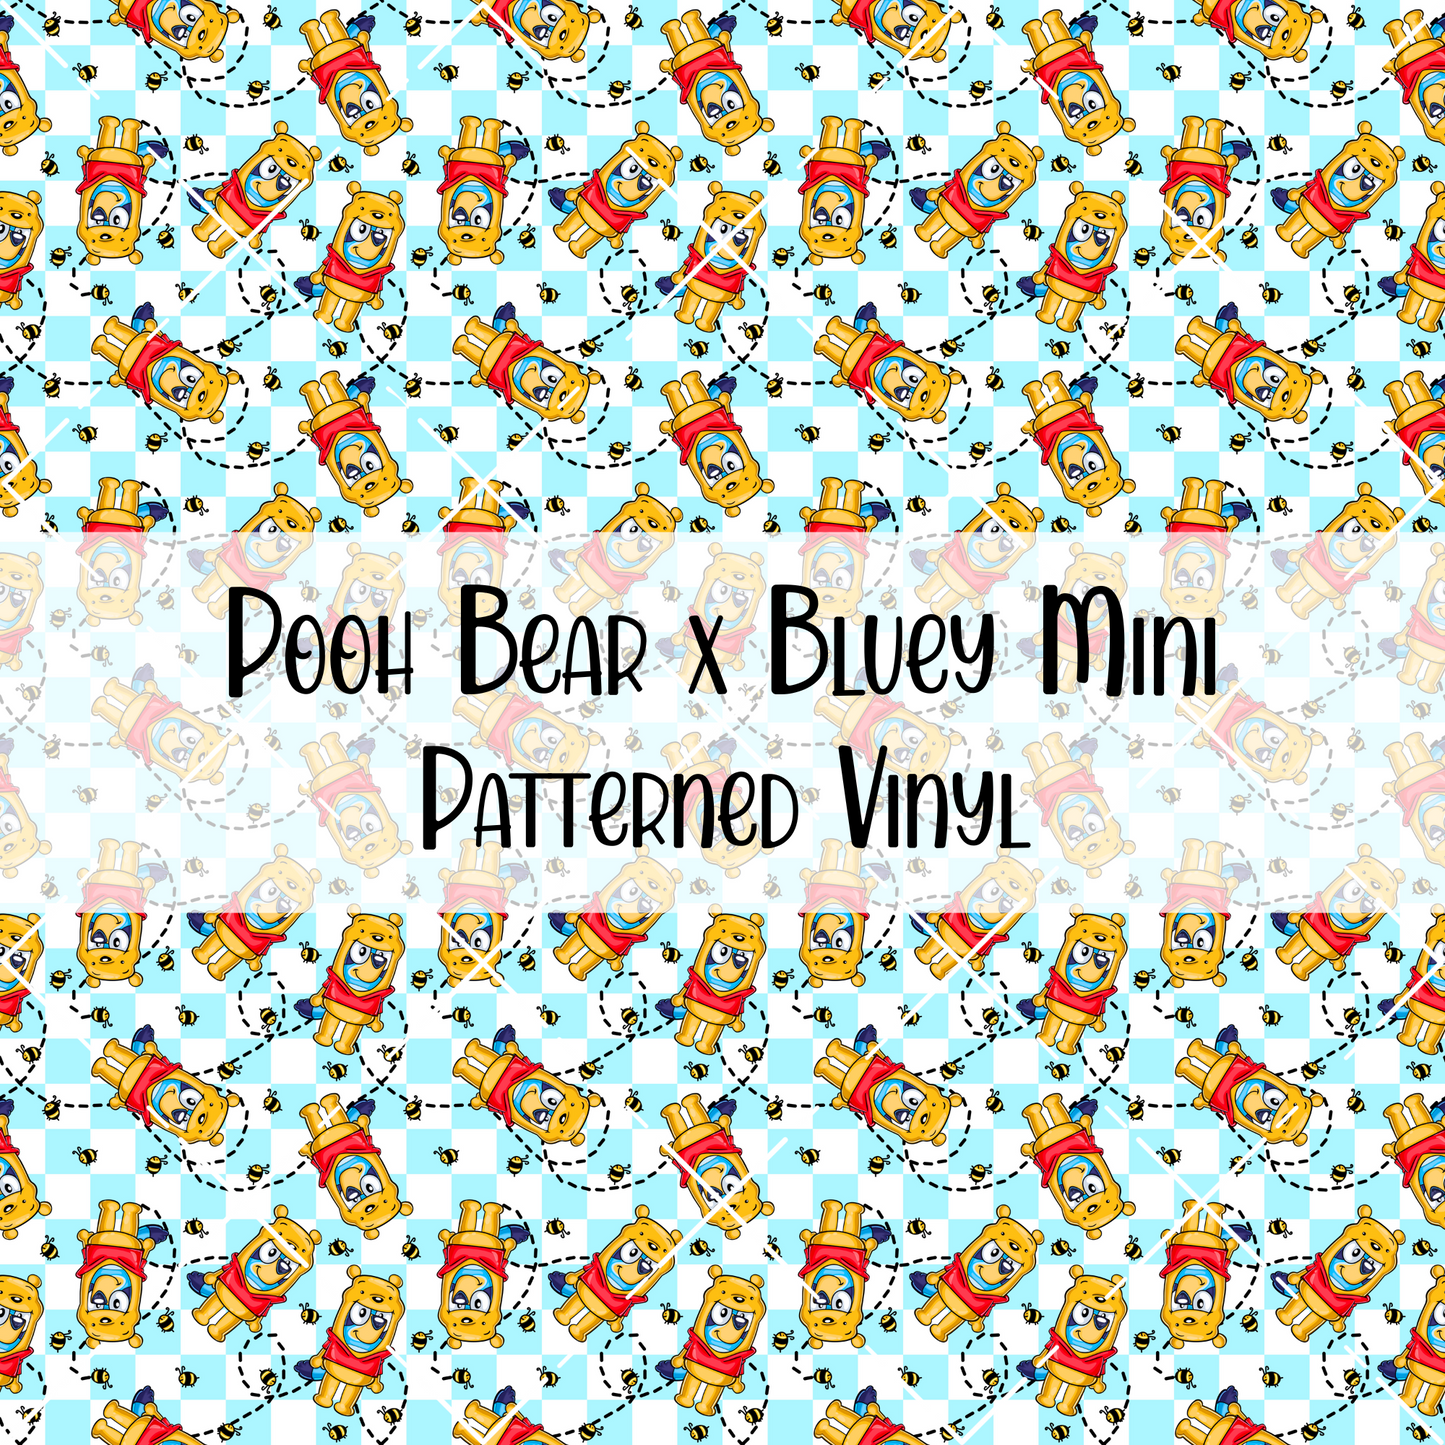 Pooh Bear x Bluey Patterned Vinyl